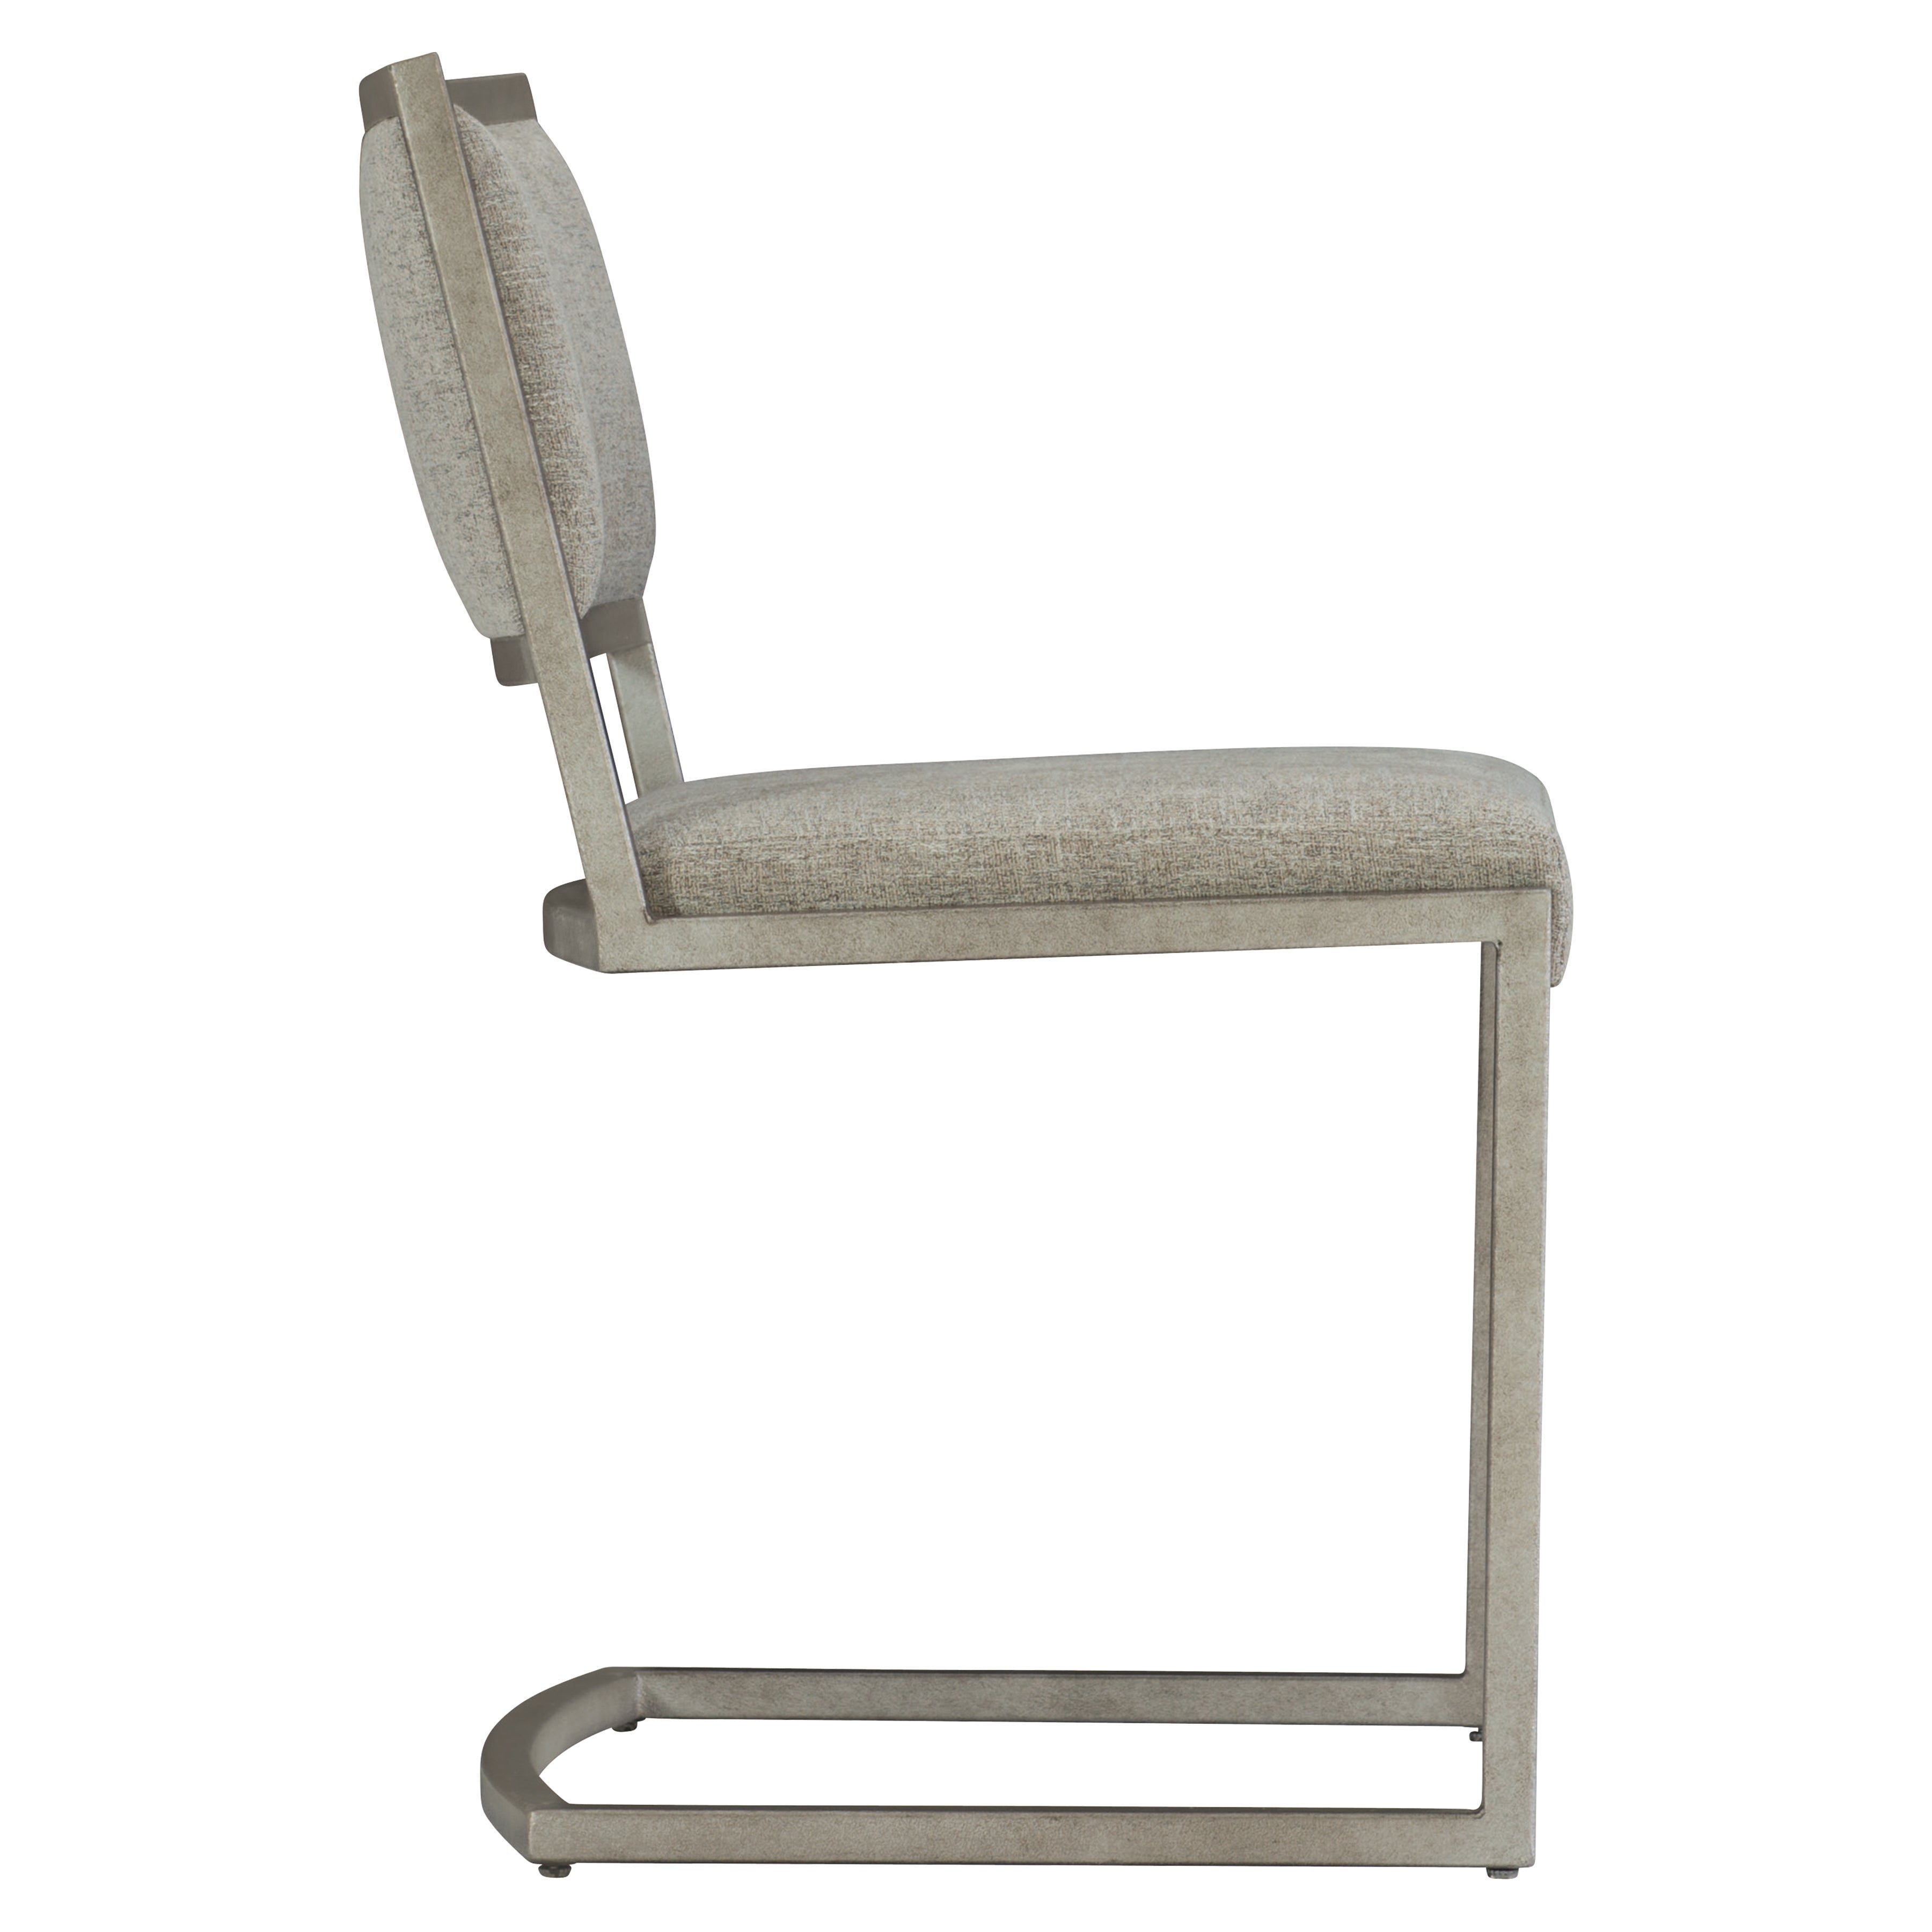 Ames Metal Side Chair